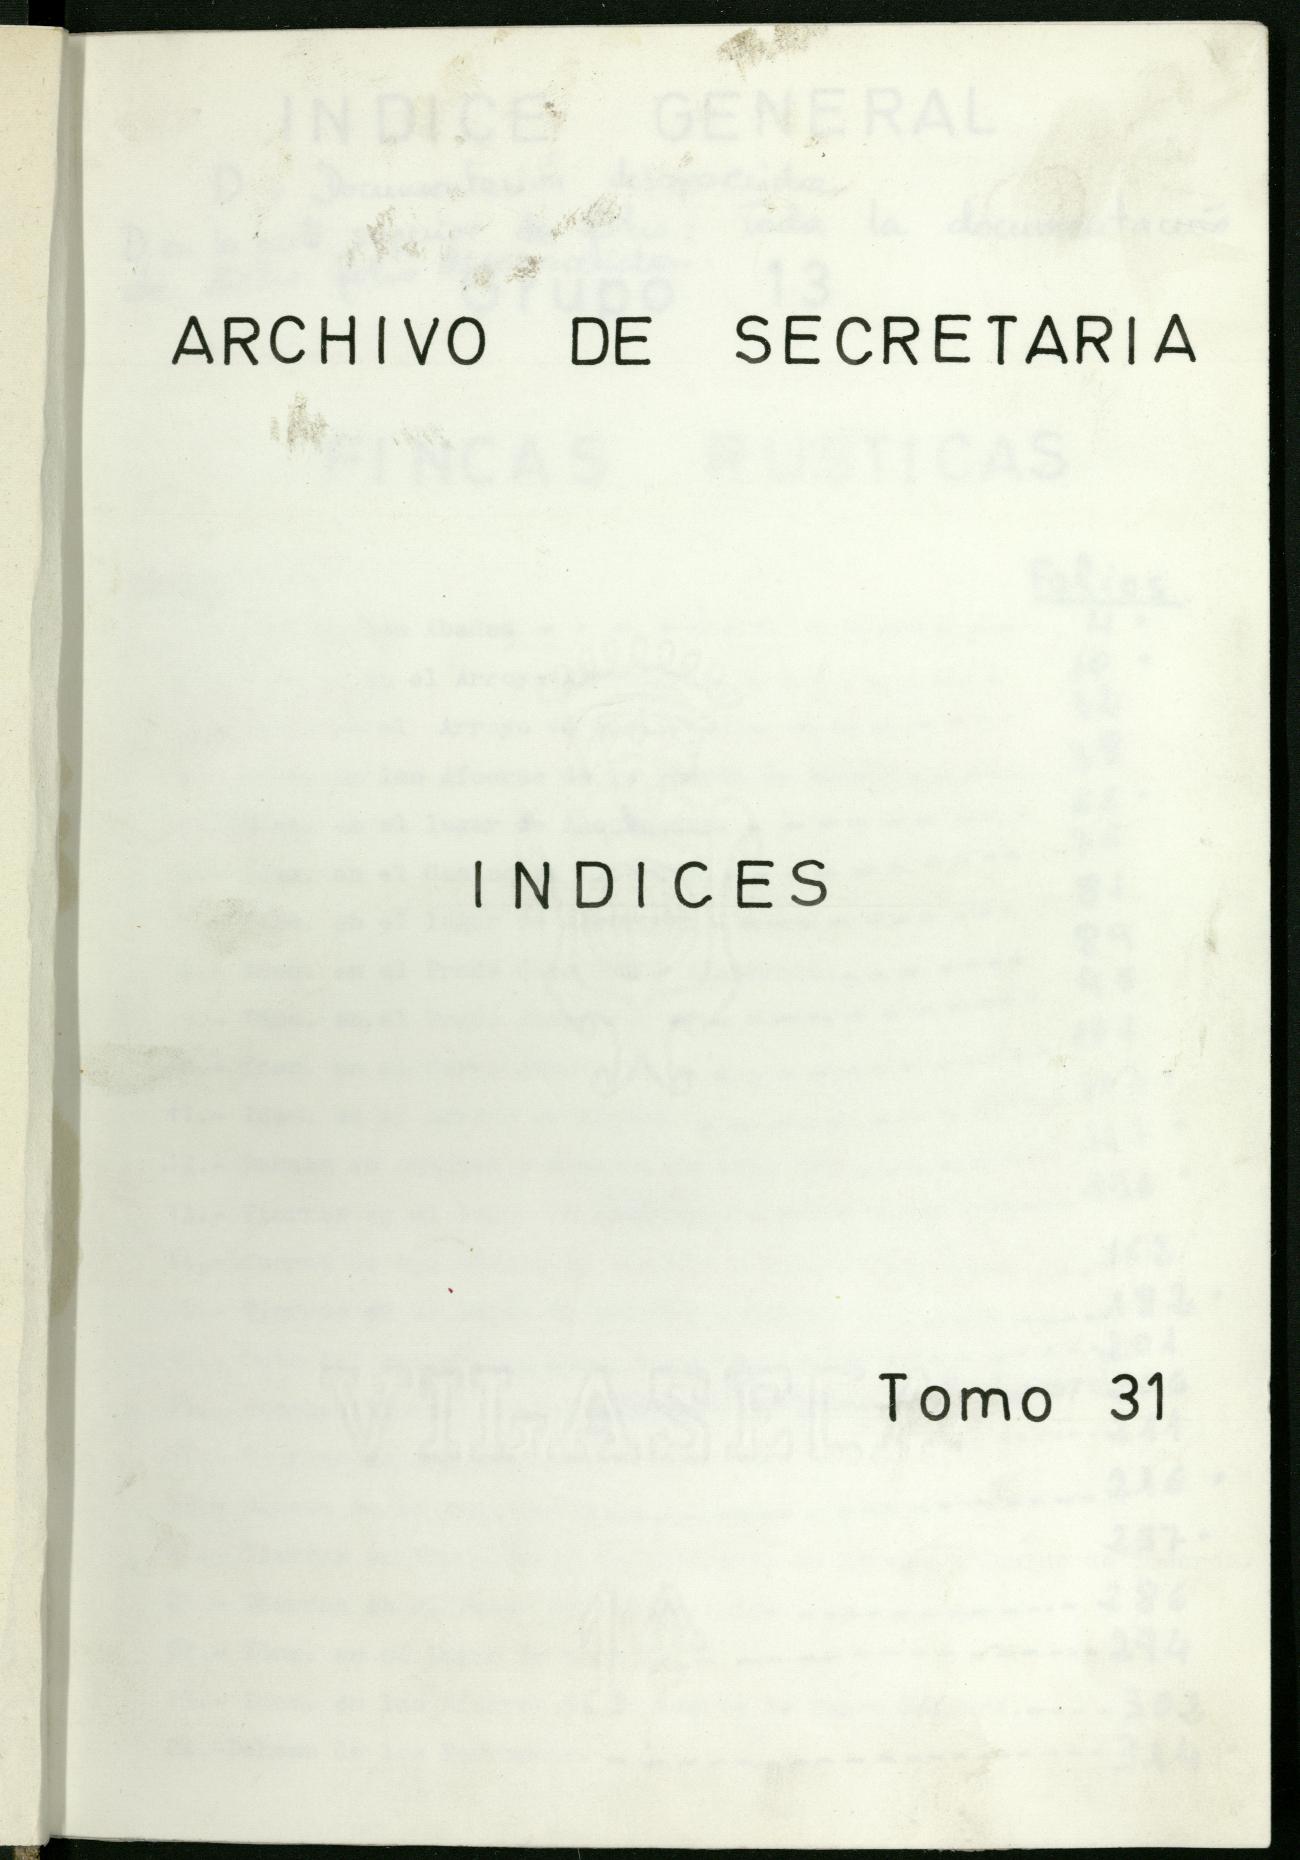 Inventario de Secretara (Tomo 31): Fincas rsticas (1427-1896)